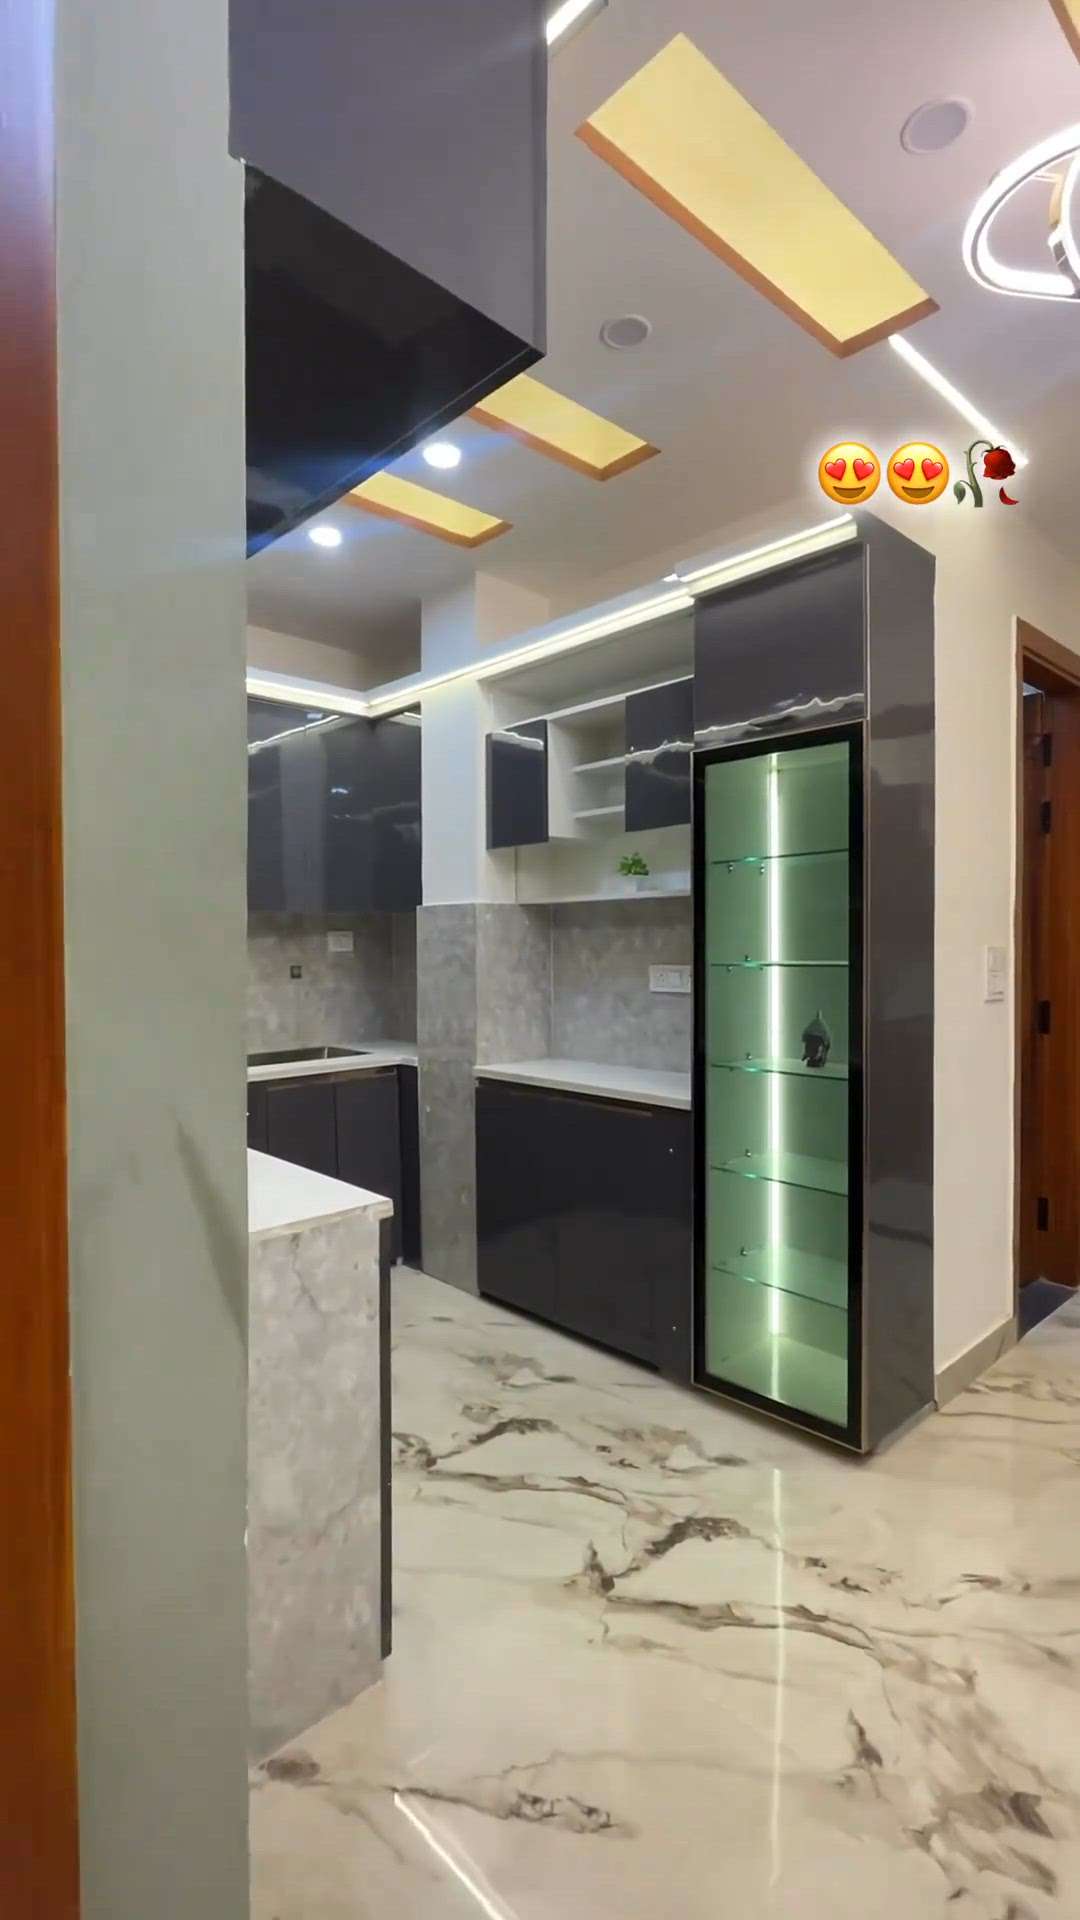 Want modular kitchen?
Contact us:- 9929915722
#InteriorDesigner 
Interior furnishings and designing?
#ModularKitchen #modularwardrobe #Modularfurniture #modularsofae #Architect #Architectural&Interior #LivingroomDesigns #LivingRoomTable #LivingRoomSofa #LivingRoomPainting #LivingRoomTVCabinet #archkerala #archeon #Modularfurniture #ModularKitchen #moderndesign #WallPutty #LivingRoomWallPaper